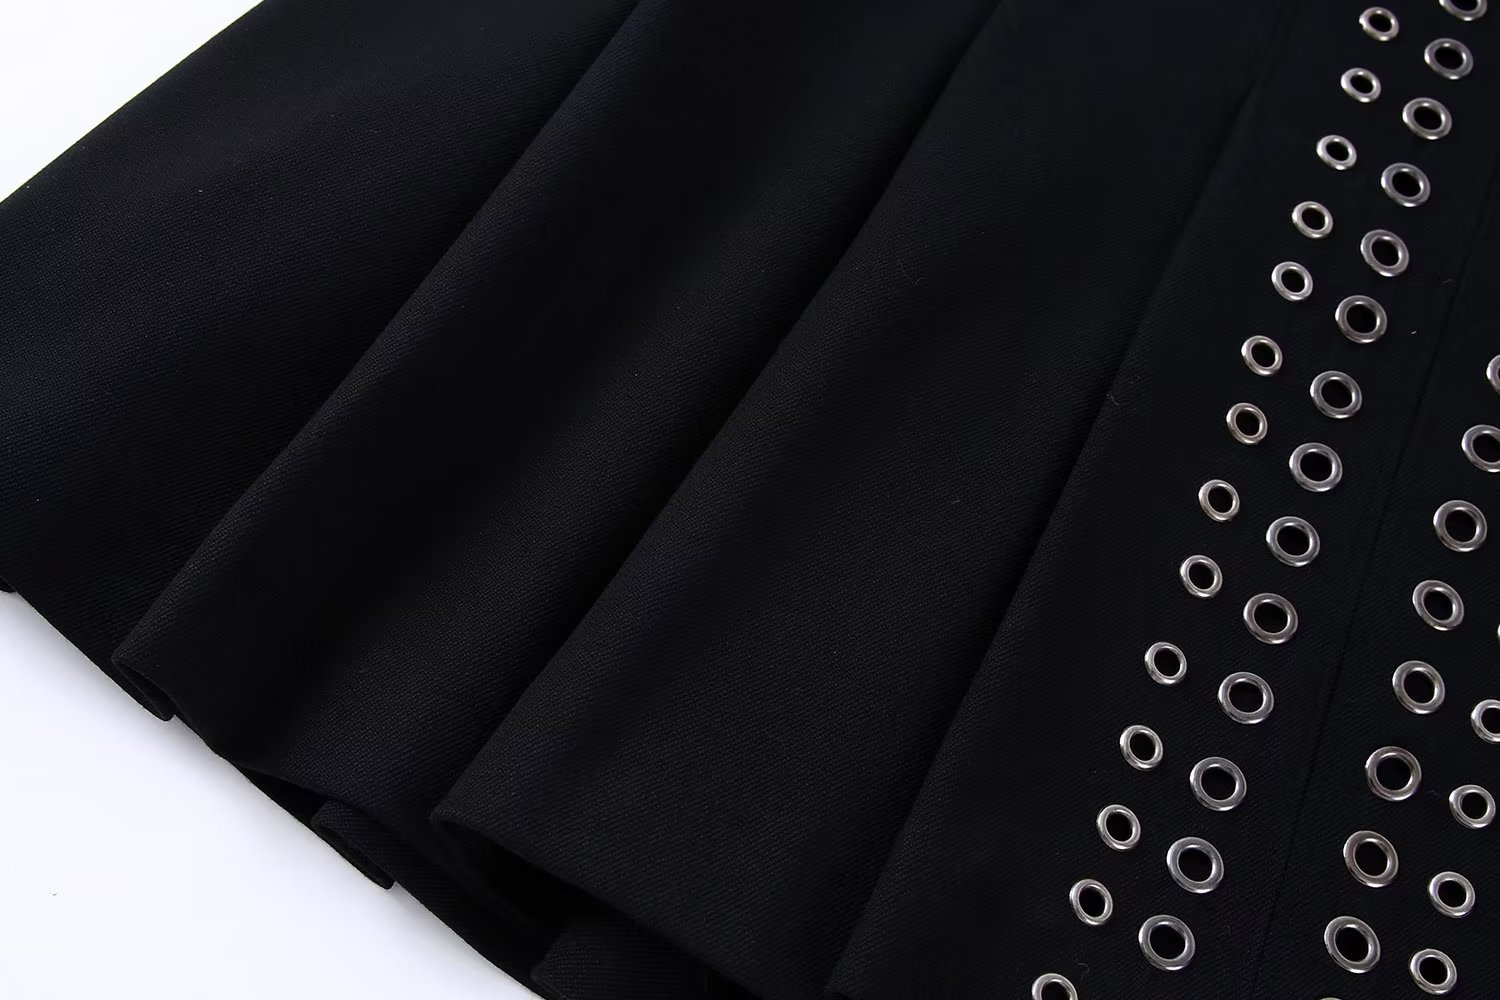 High Waist Black Ring Decoration Mini Skirt - Skirts - Uniqistic.com